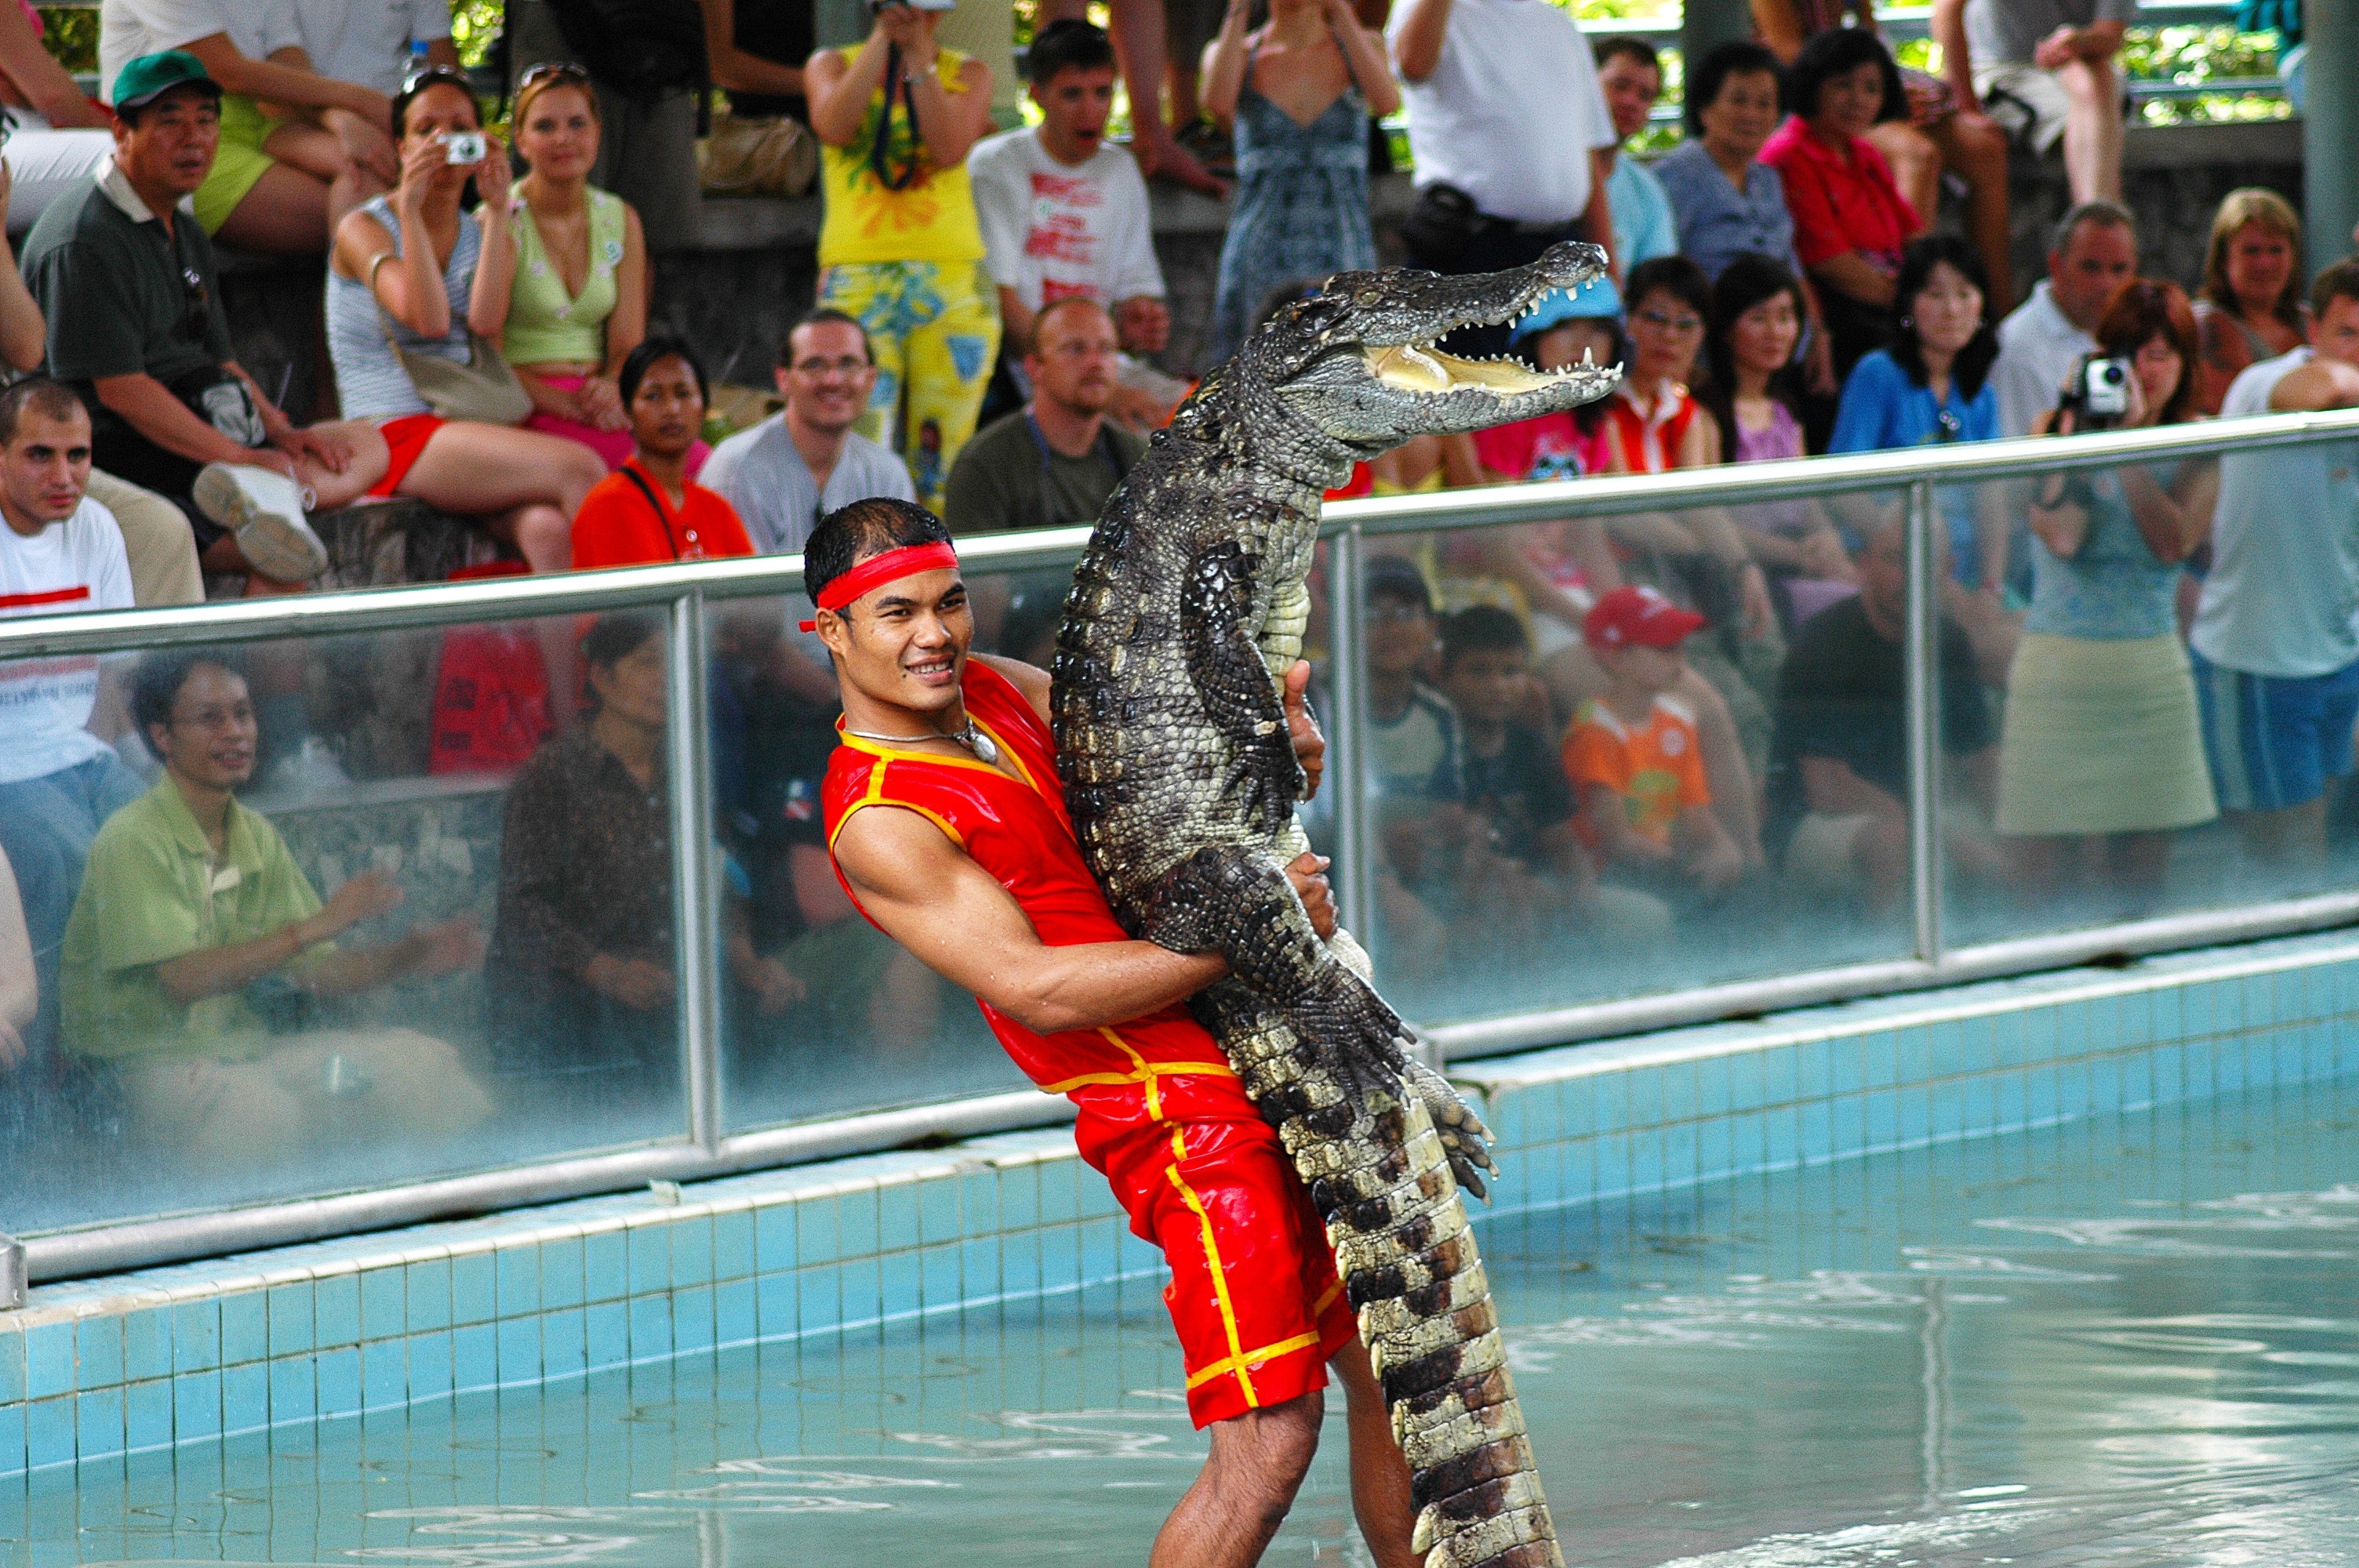 Crocodile Band, Million Year Stone Park, sport, large group of people